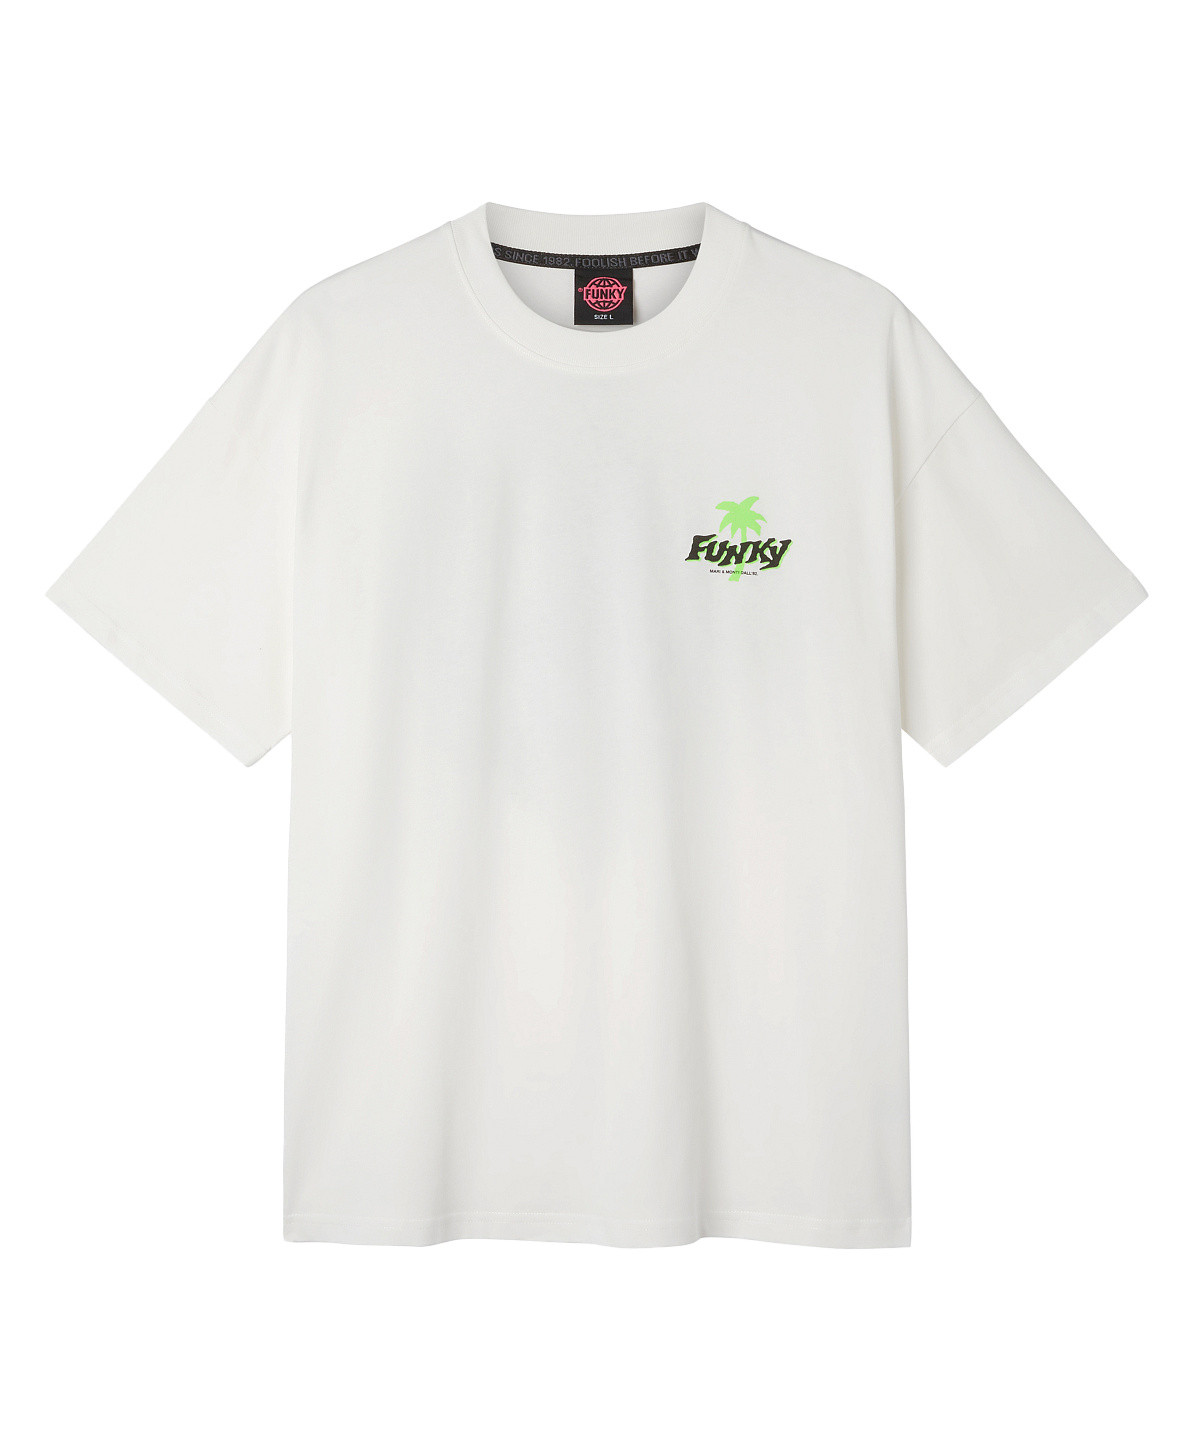 Funky - T-shirt girocollo con stampa mari e monti, Bianco, large image number 0